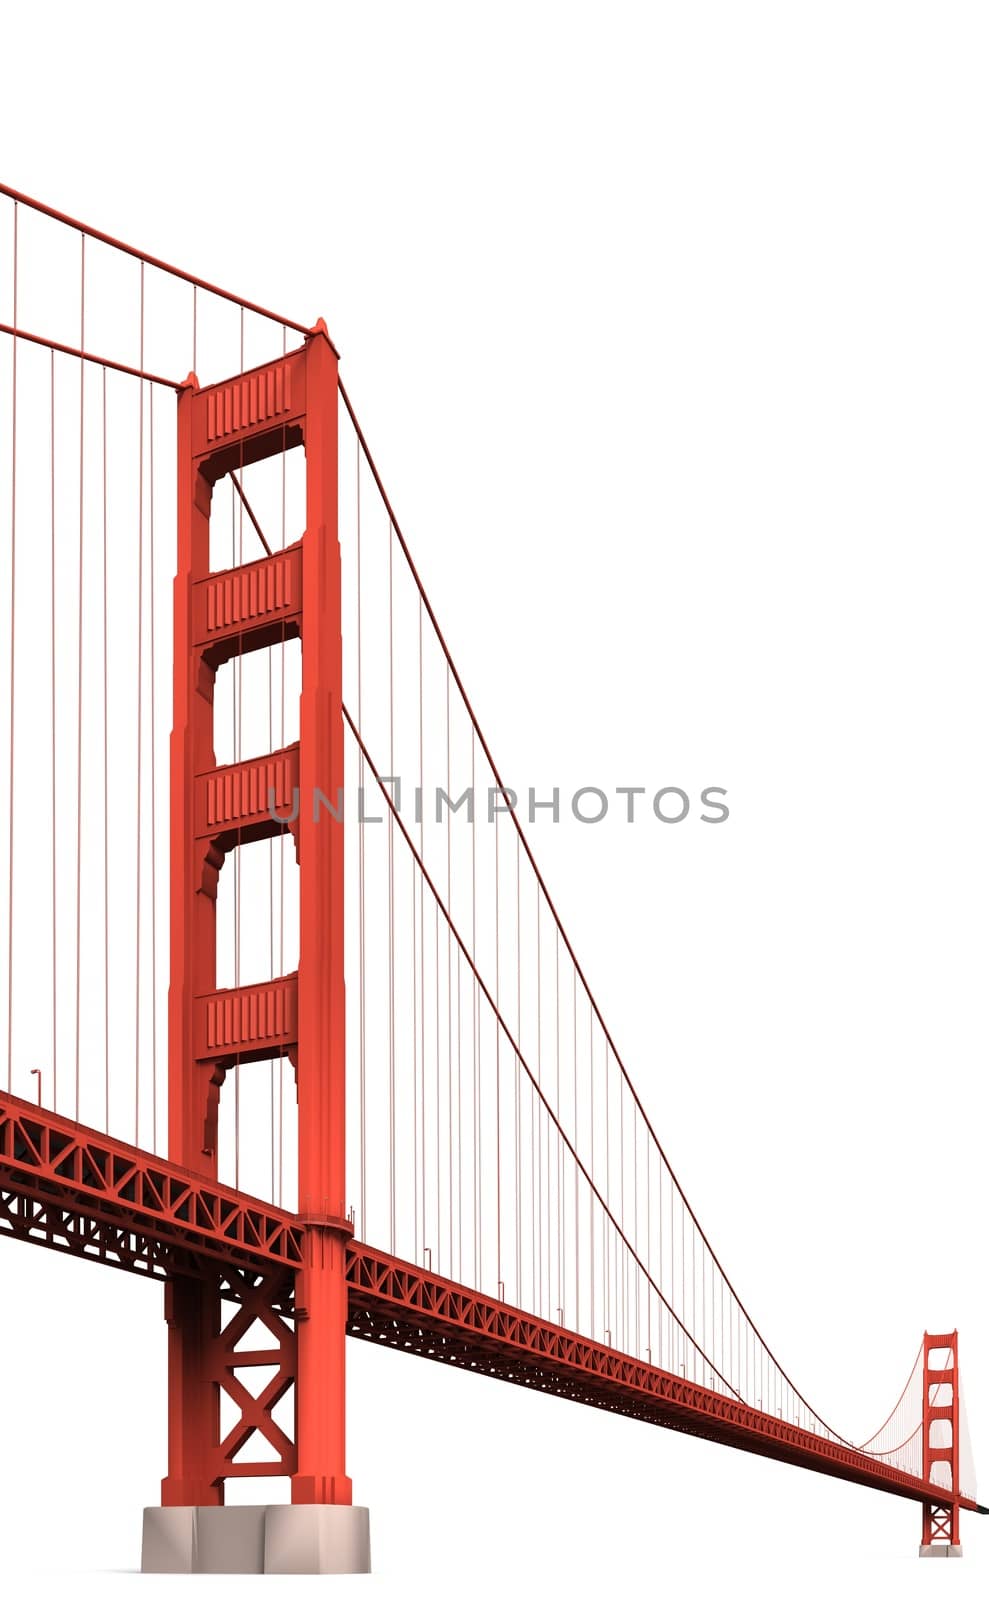 The golden gate bridge is the longest suspension bridge in the world.